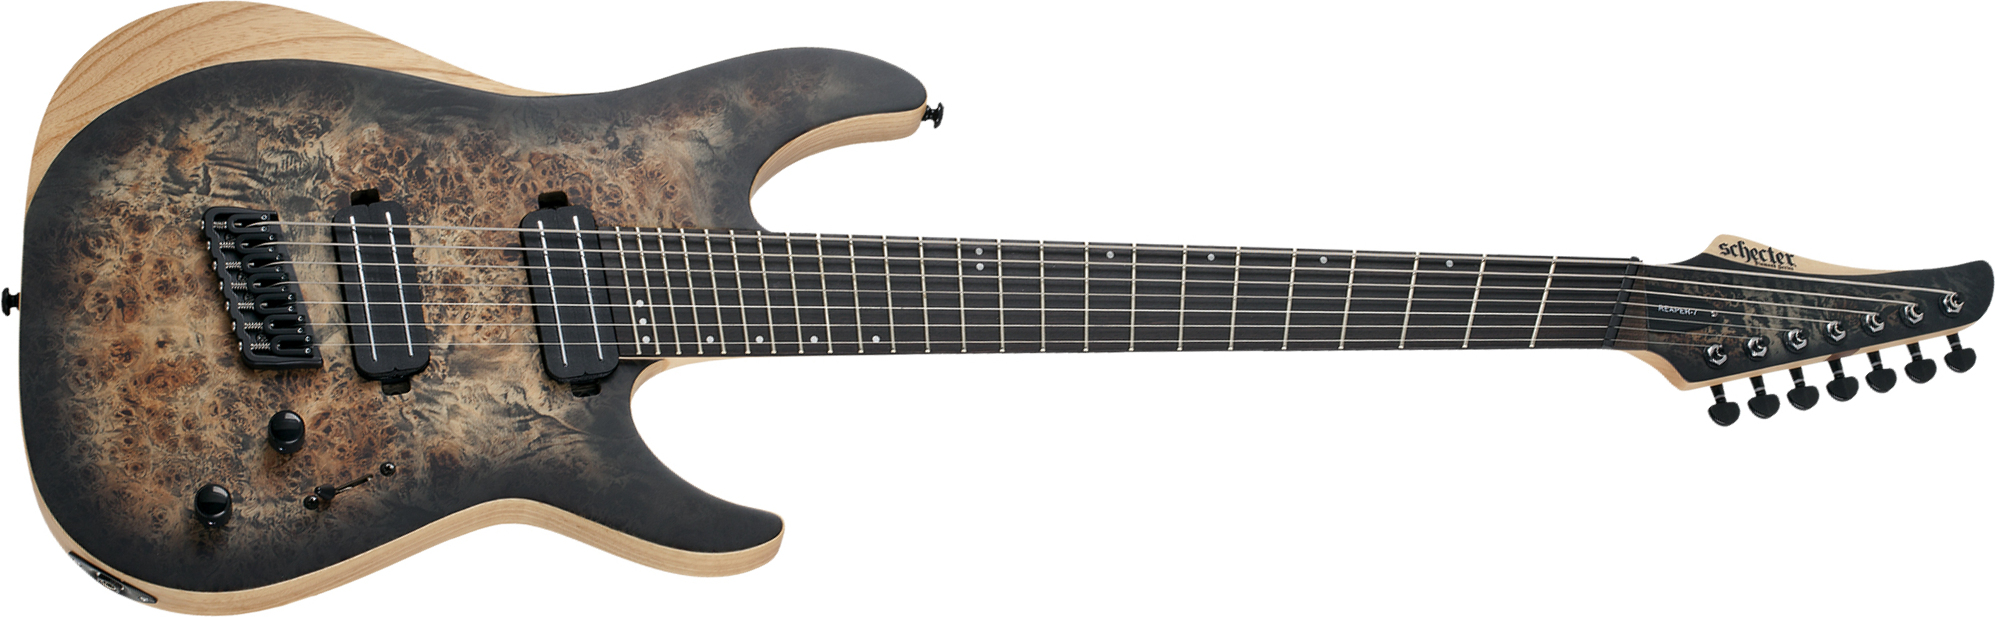 Schecter Reaper-7 Multiscale 7c Ht 2h Eb - Satin Charcoal Burst - Multi-scale gitaar - Main picture